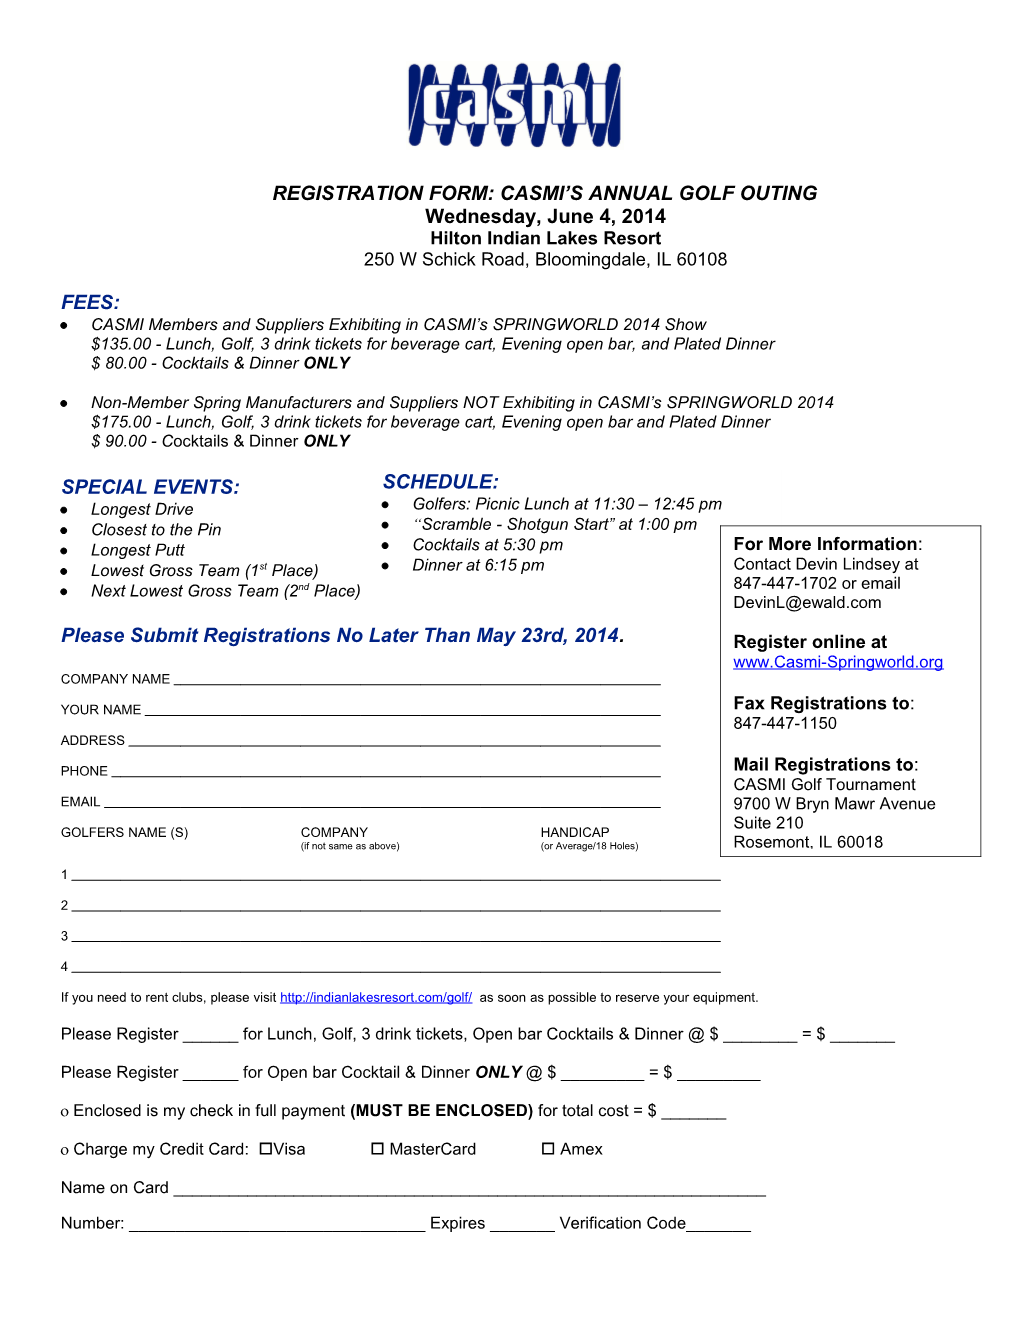 Registration Form: Casmi S Annual Golf Outing